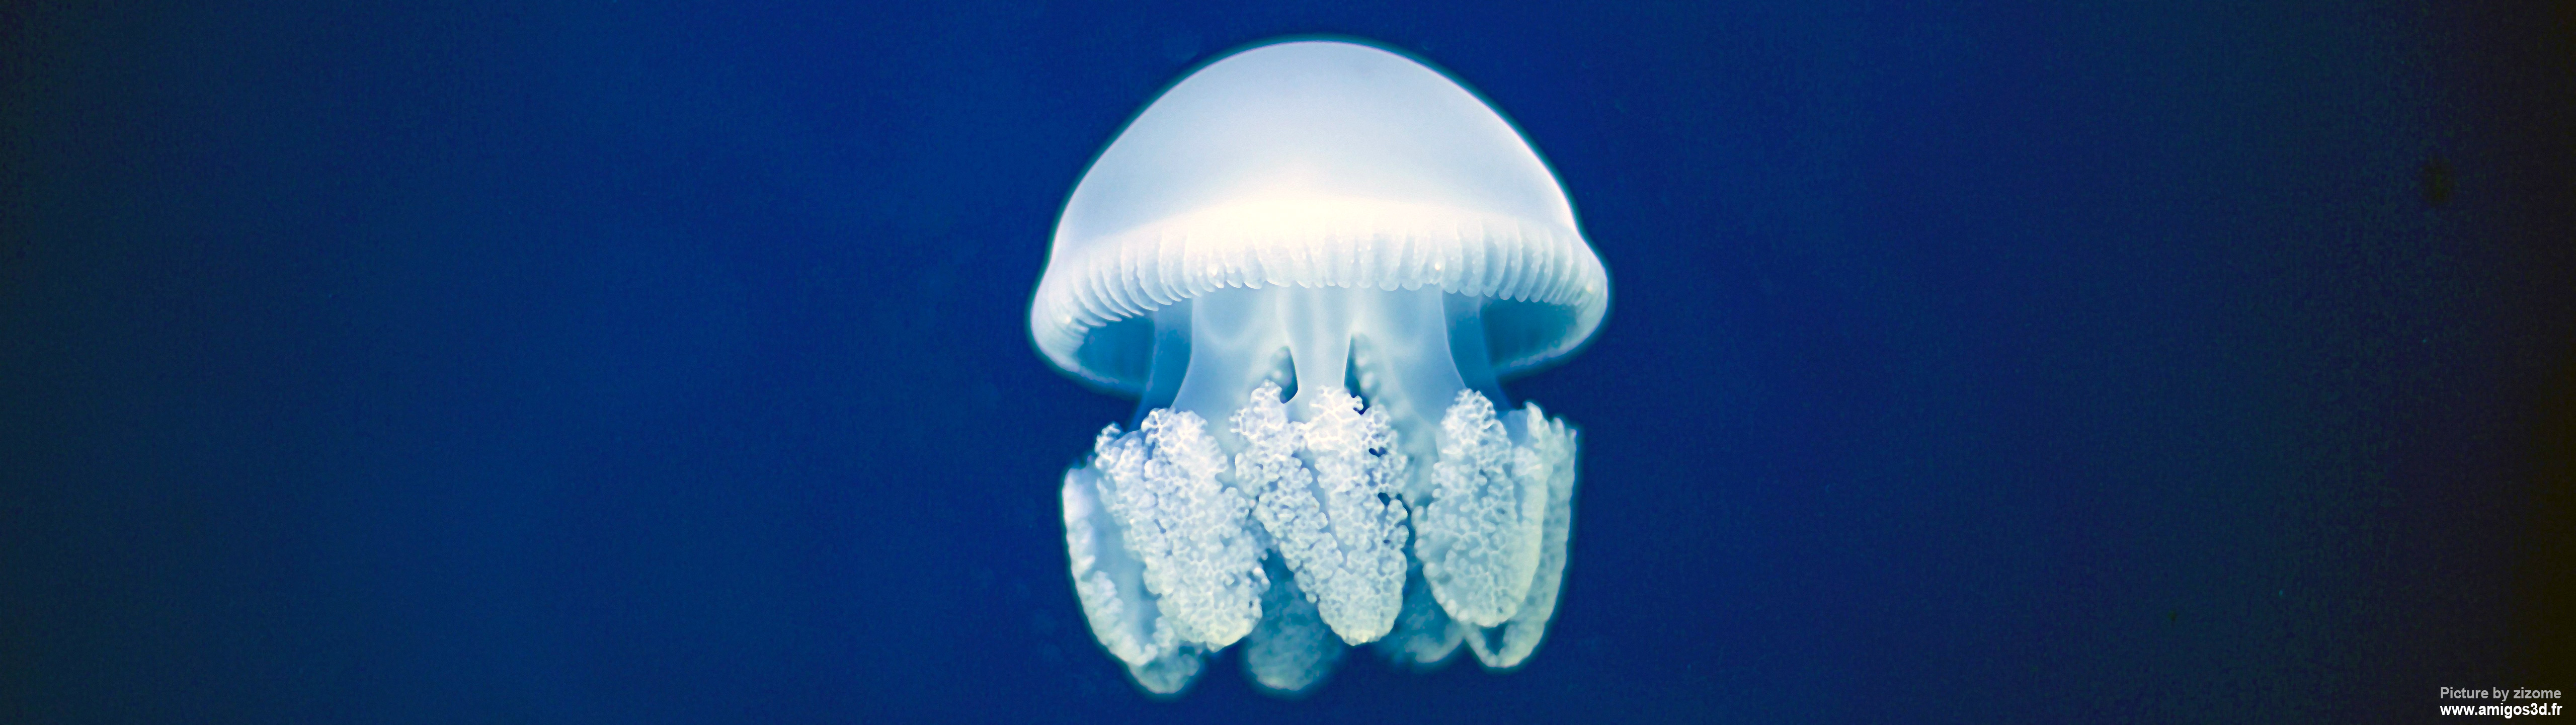 143-jellyfish